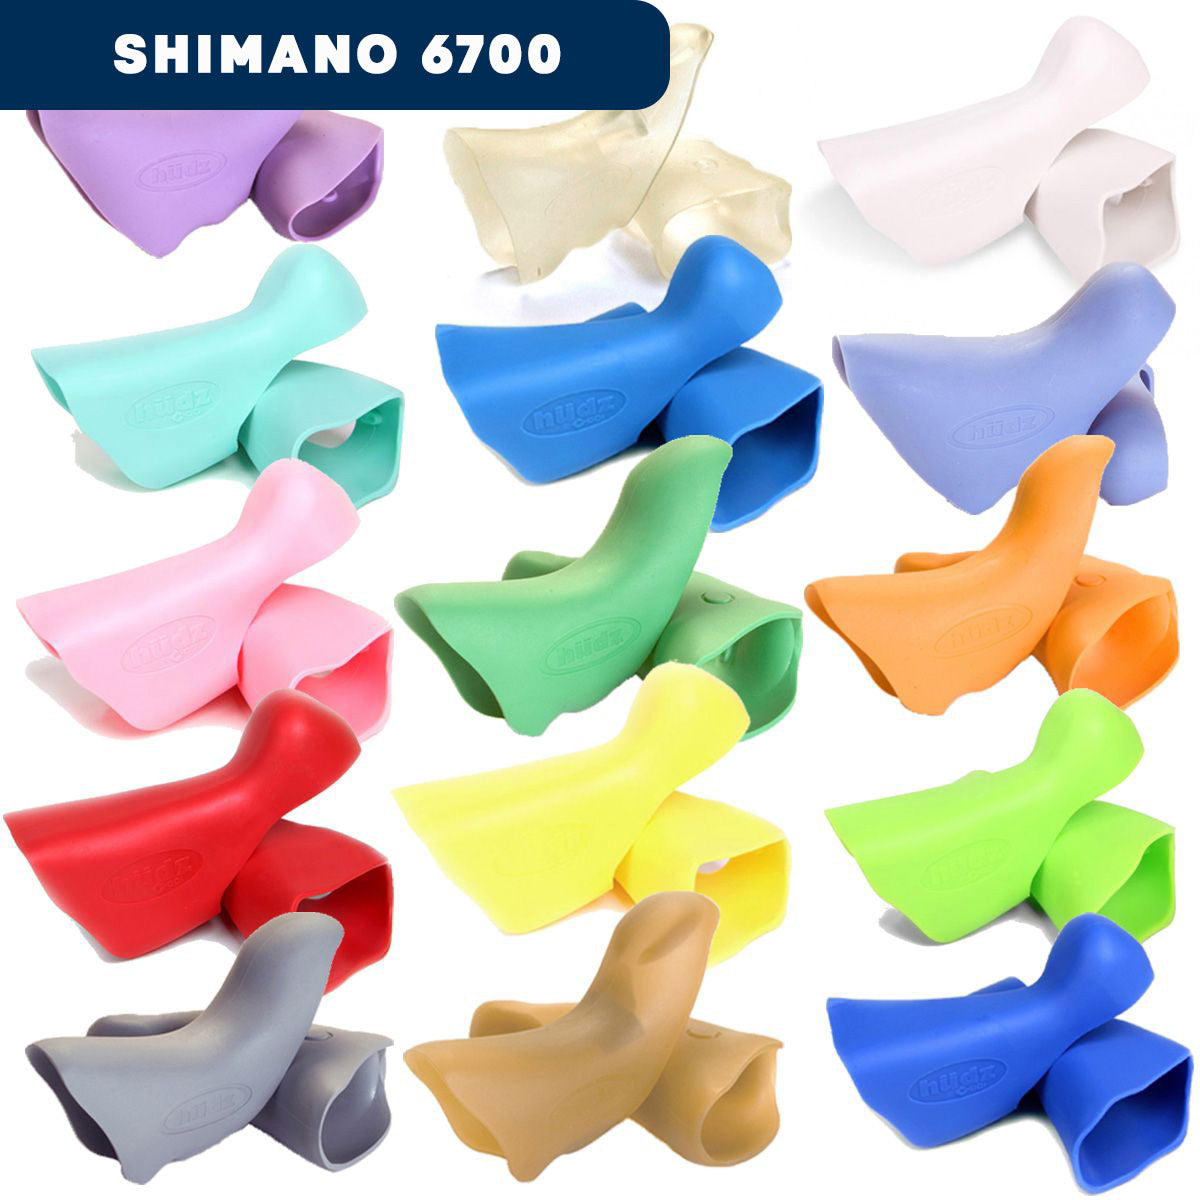 Hudz Replacement Brake Hoods - Shimano 6700